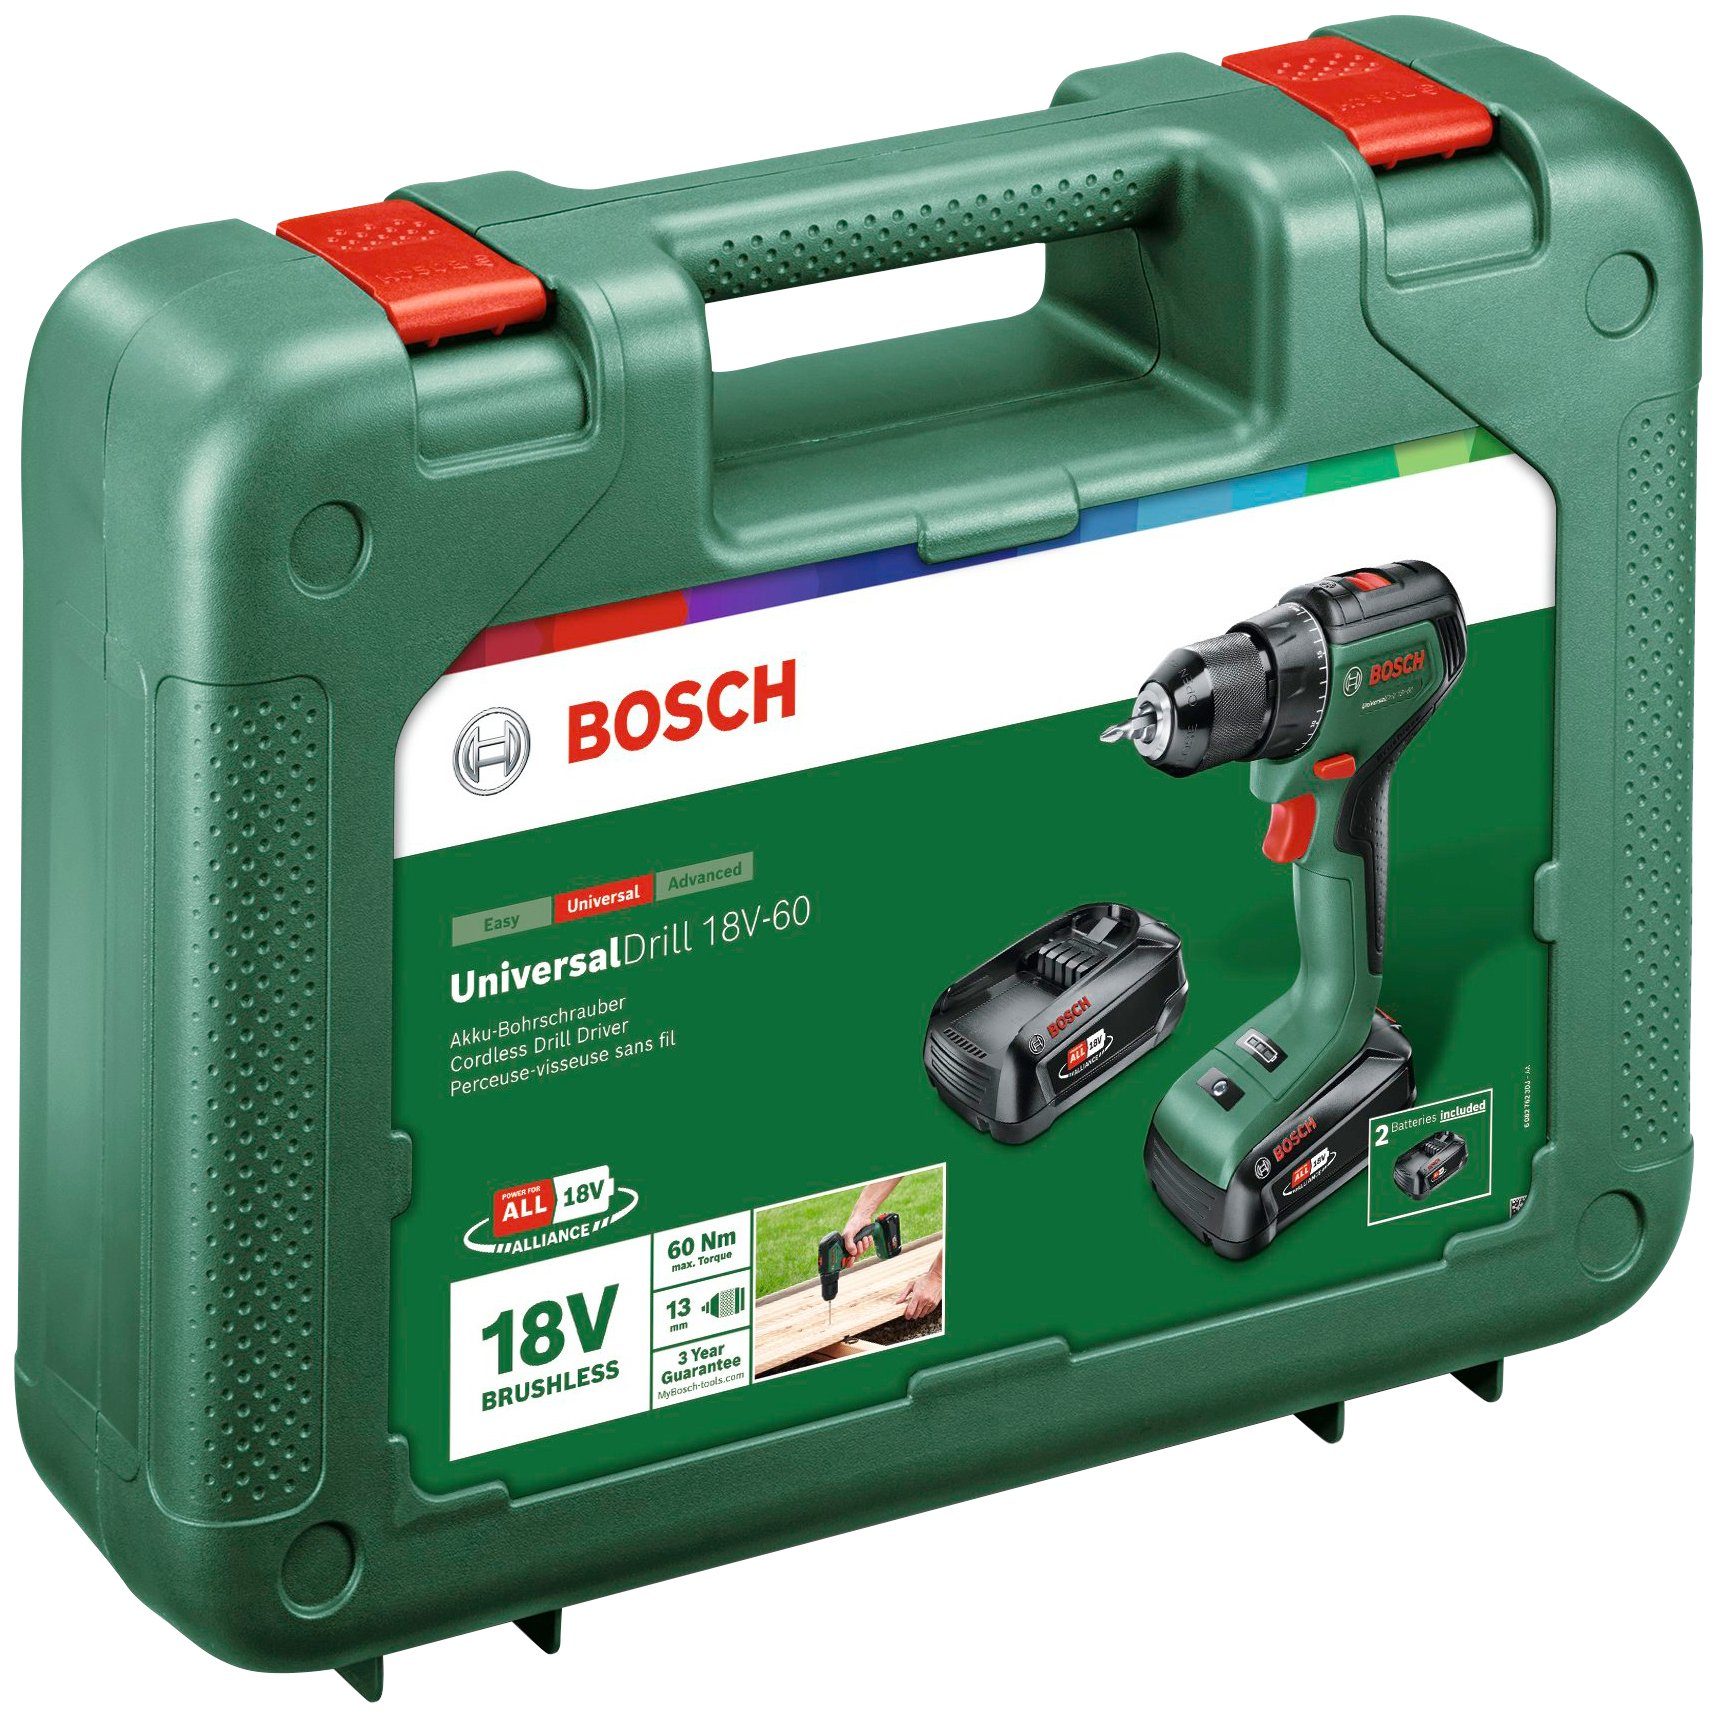 Bosch Home & Garden Akku-Bohrschrauber Ladegerät 18V-60, 2 Akkus Inkl. Koffer, UniversalDrill mit 18V/2Ah und